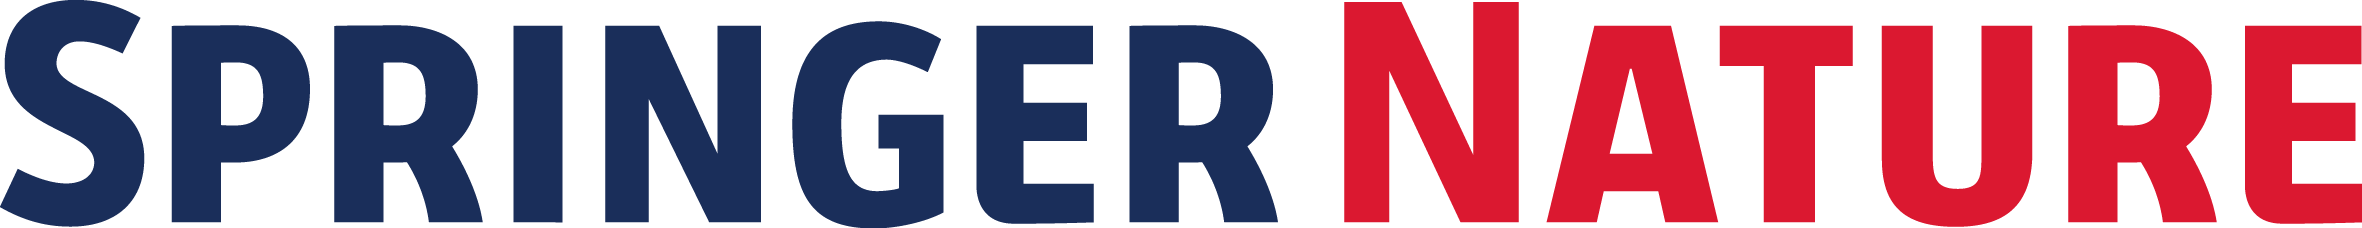 Biomed Central Logo - Springer Nature Logo (2362x228)